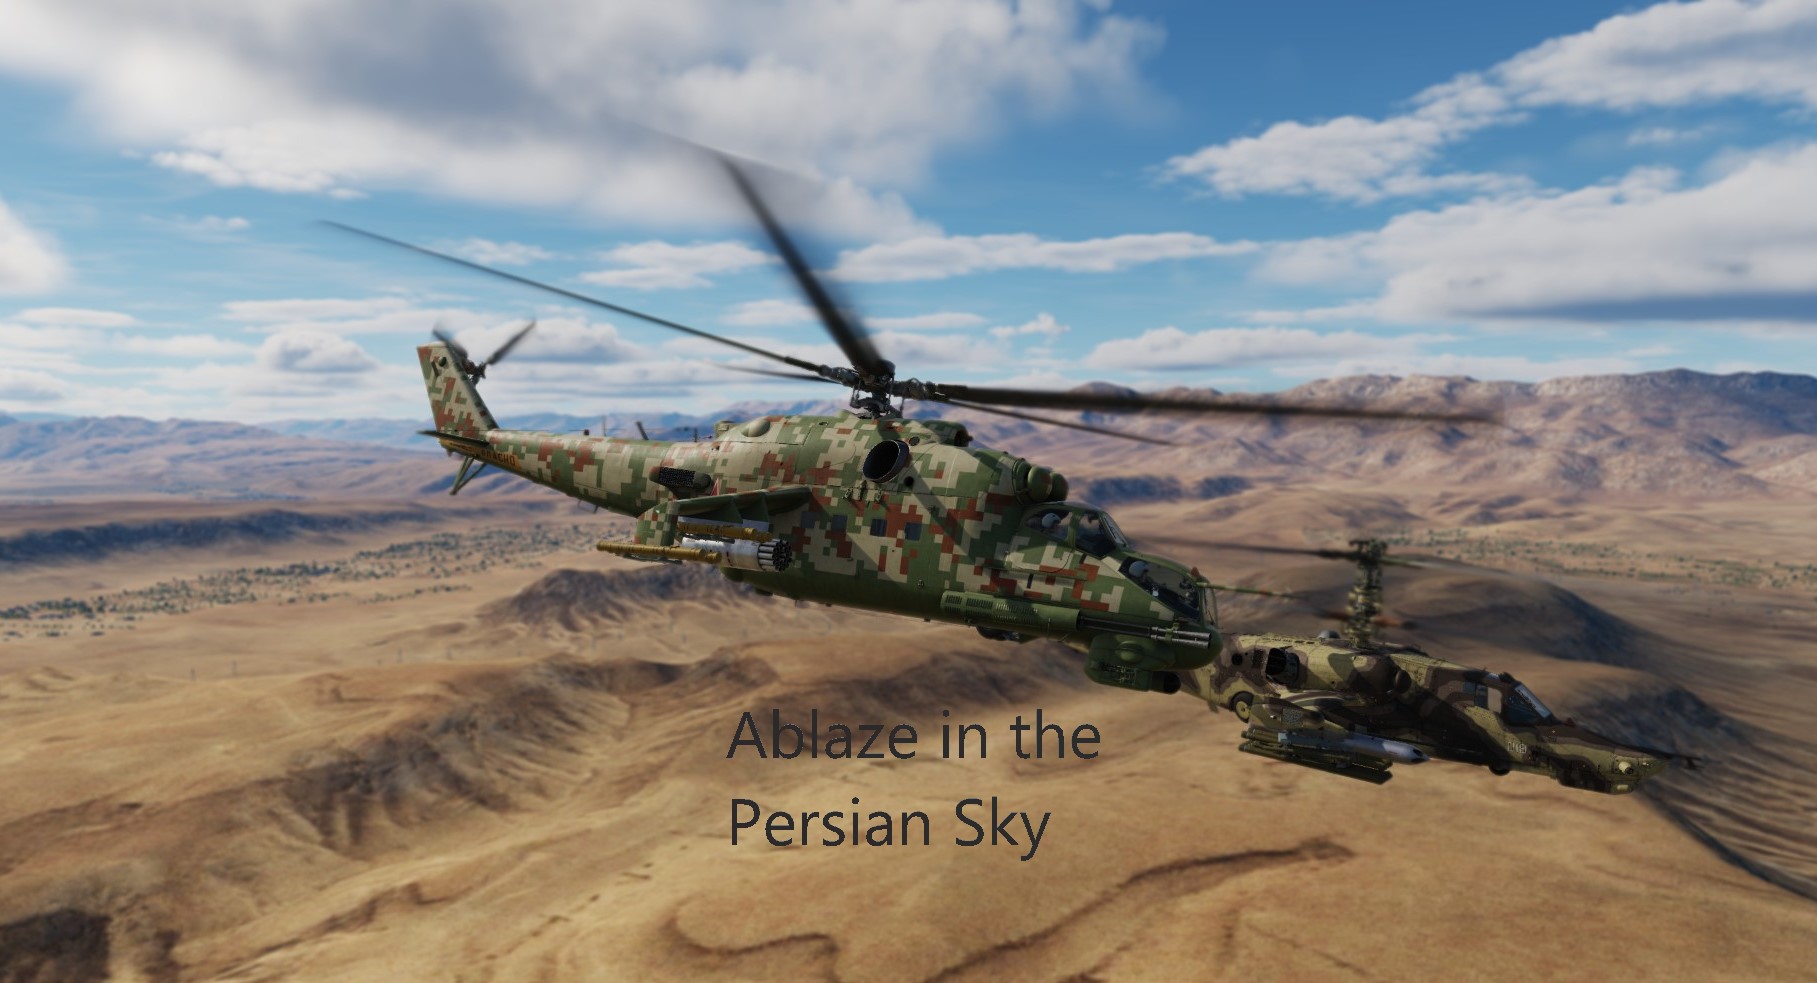 A blaze in the Persian Sky